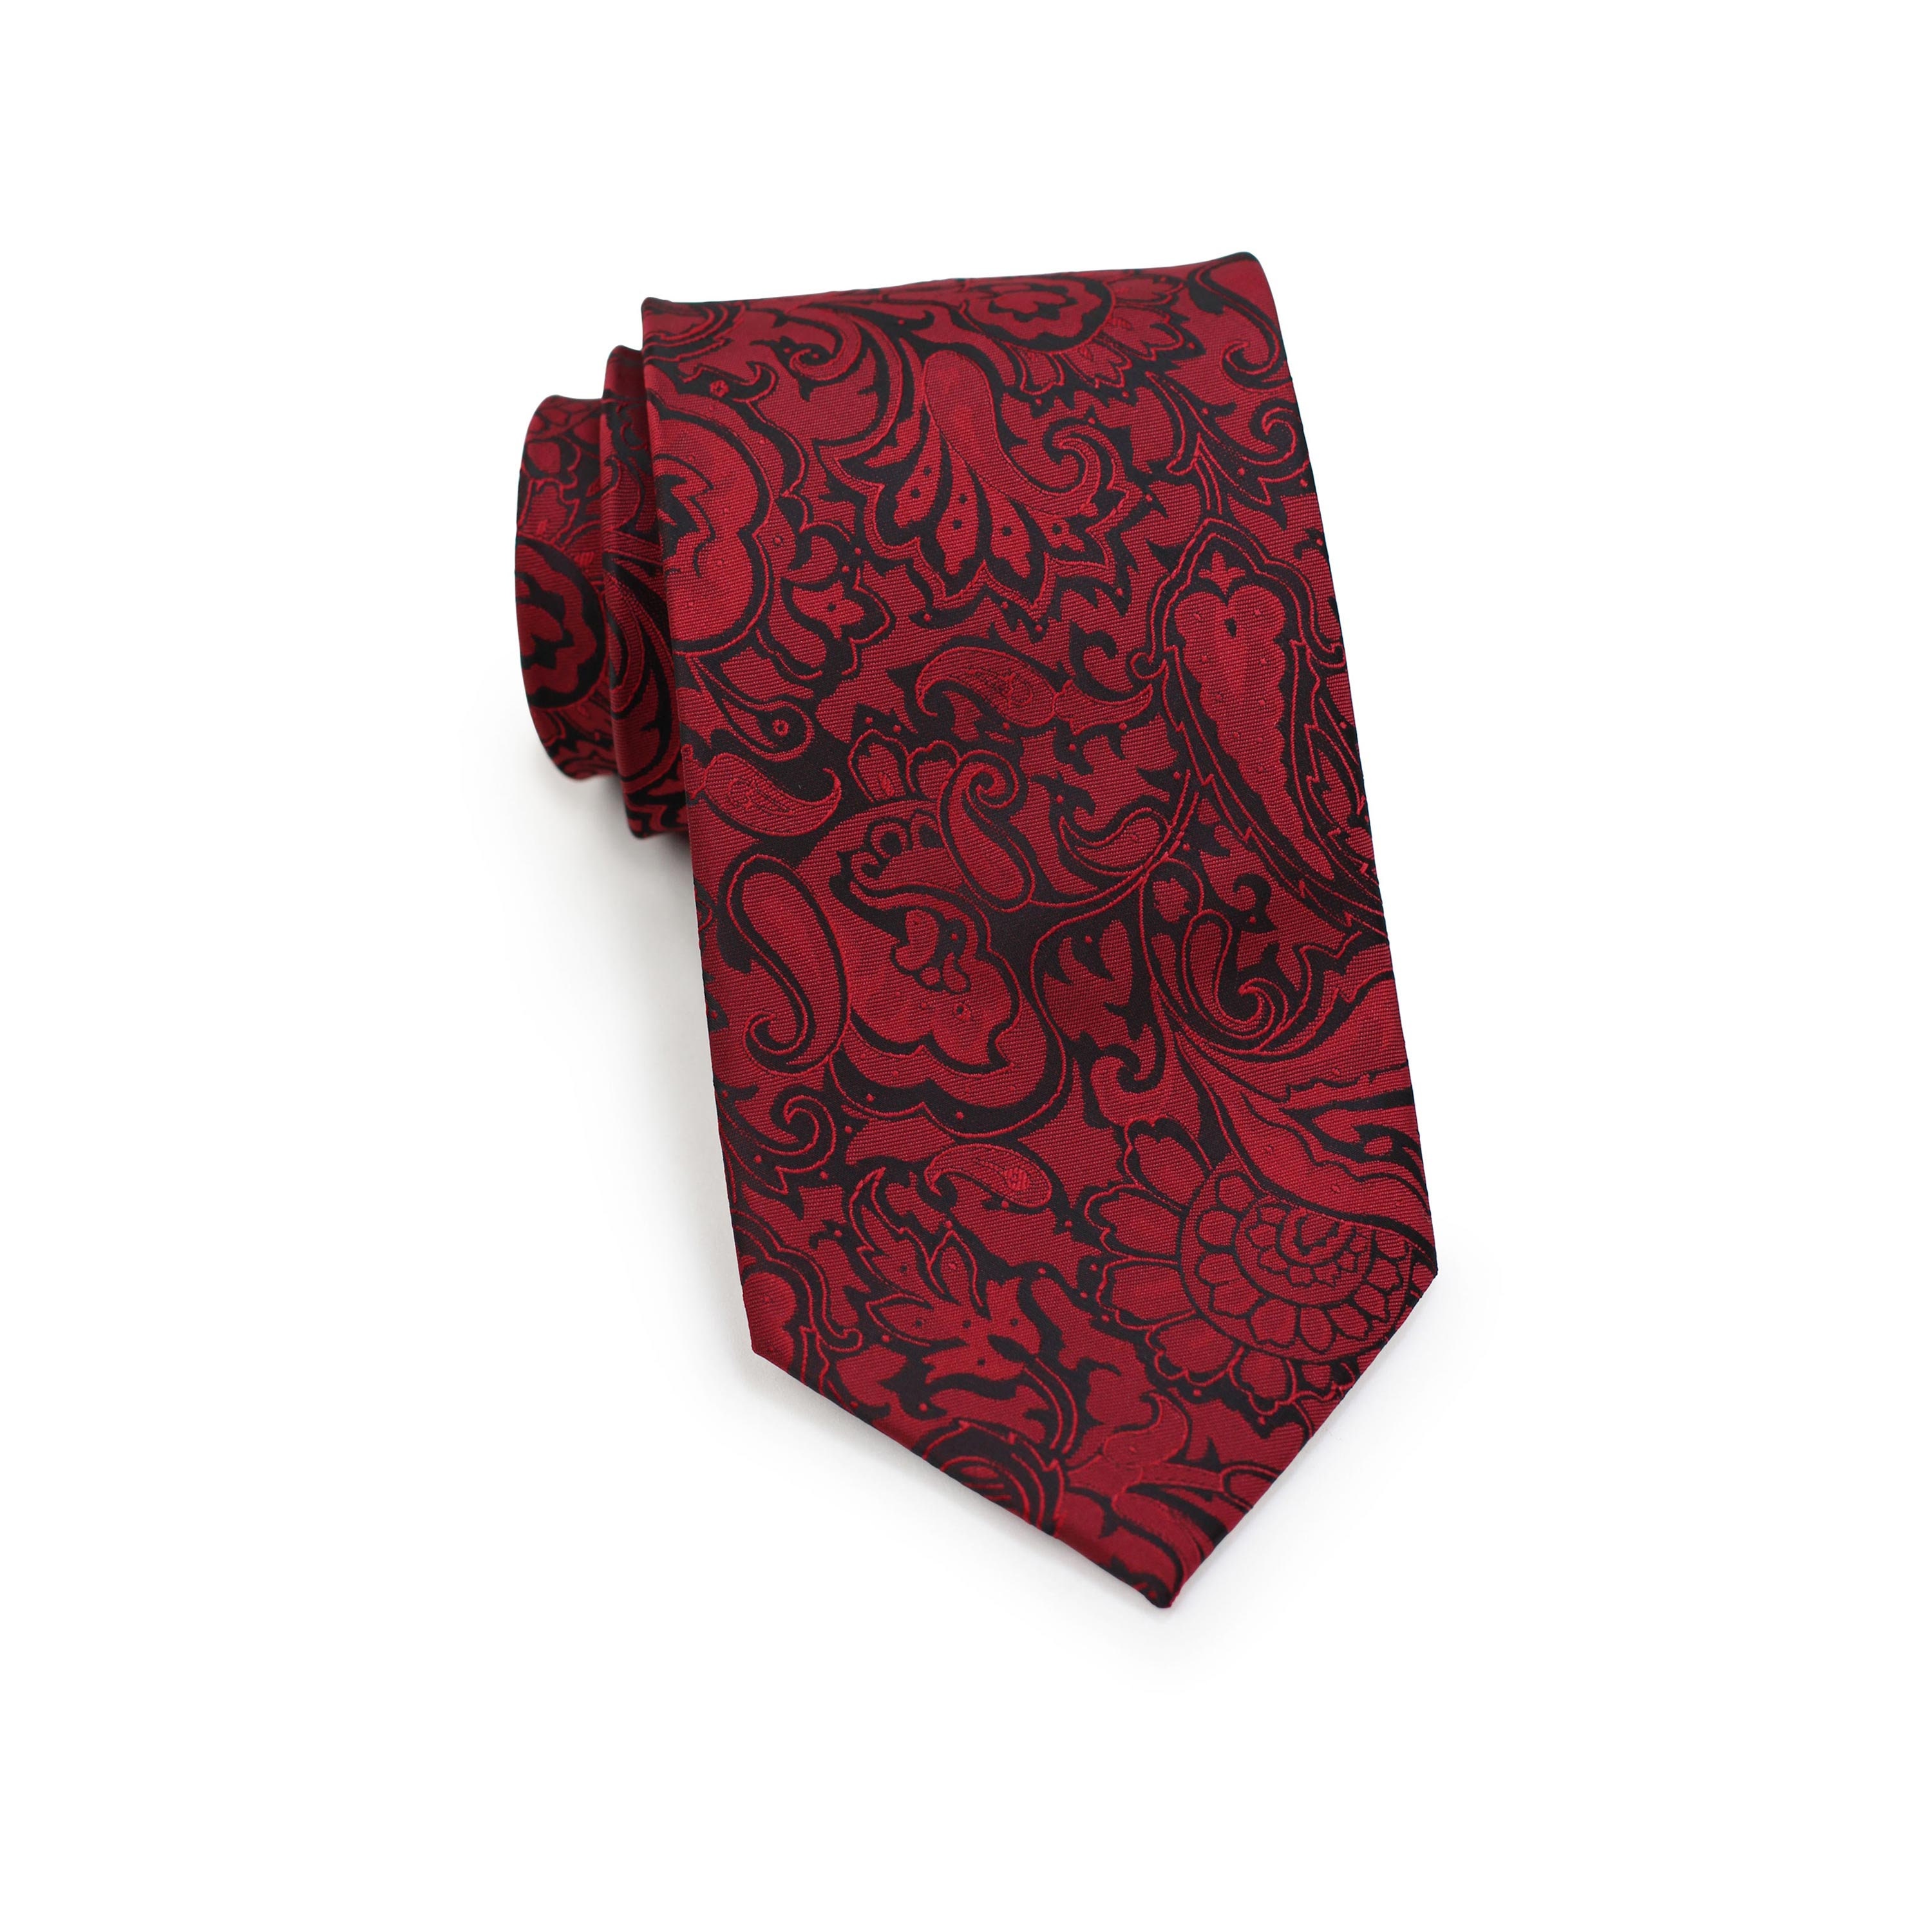 MOHSLEE Mens Red Wine Paisley Suit Tie Handky Wedding Necktie Pocket Square Set